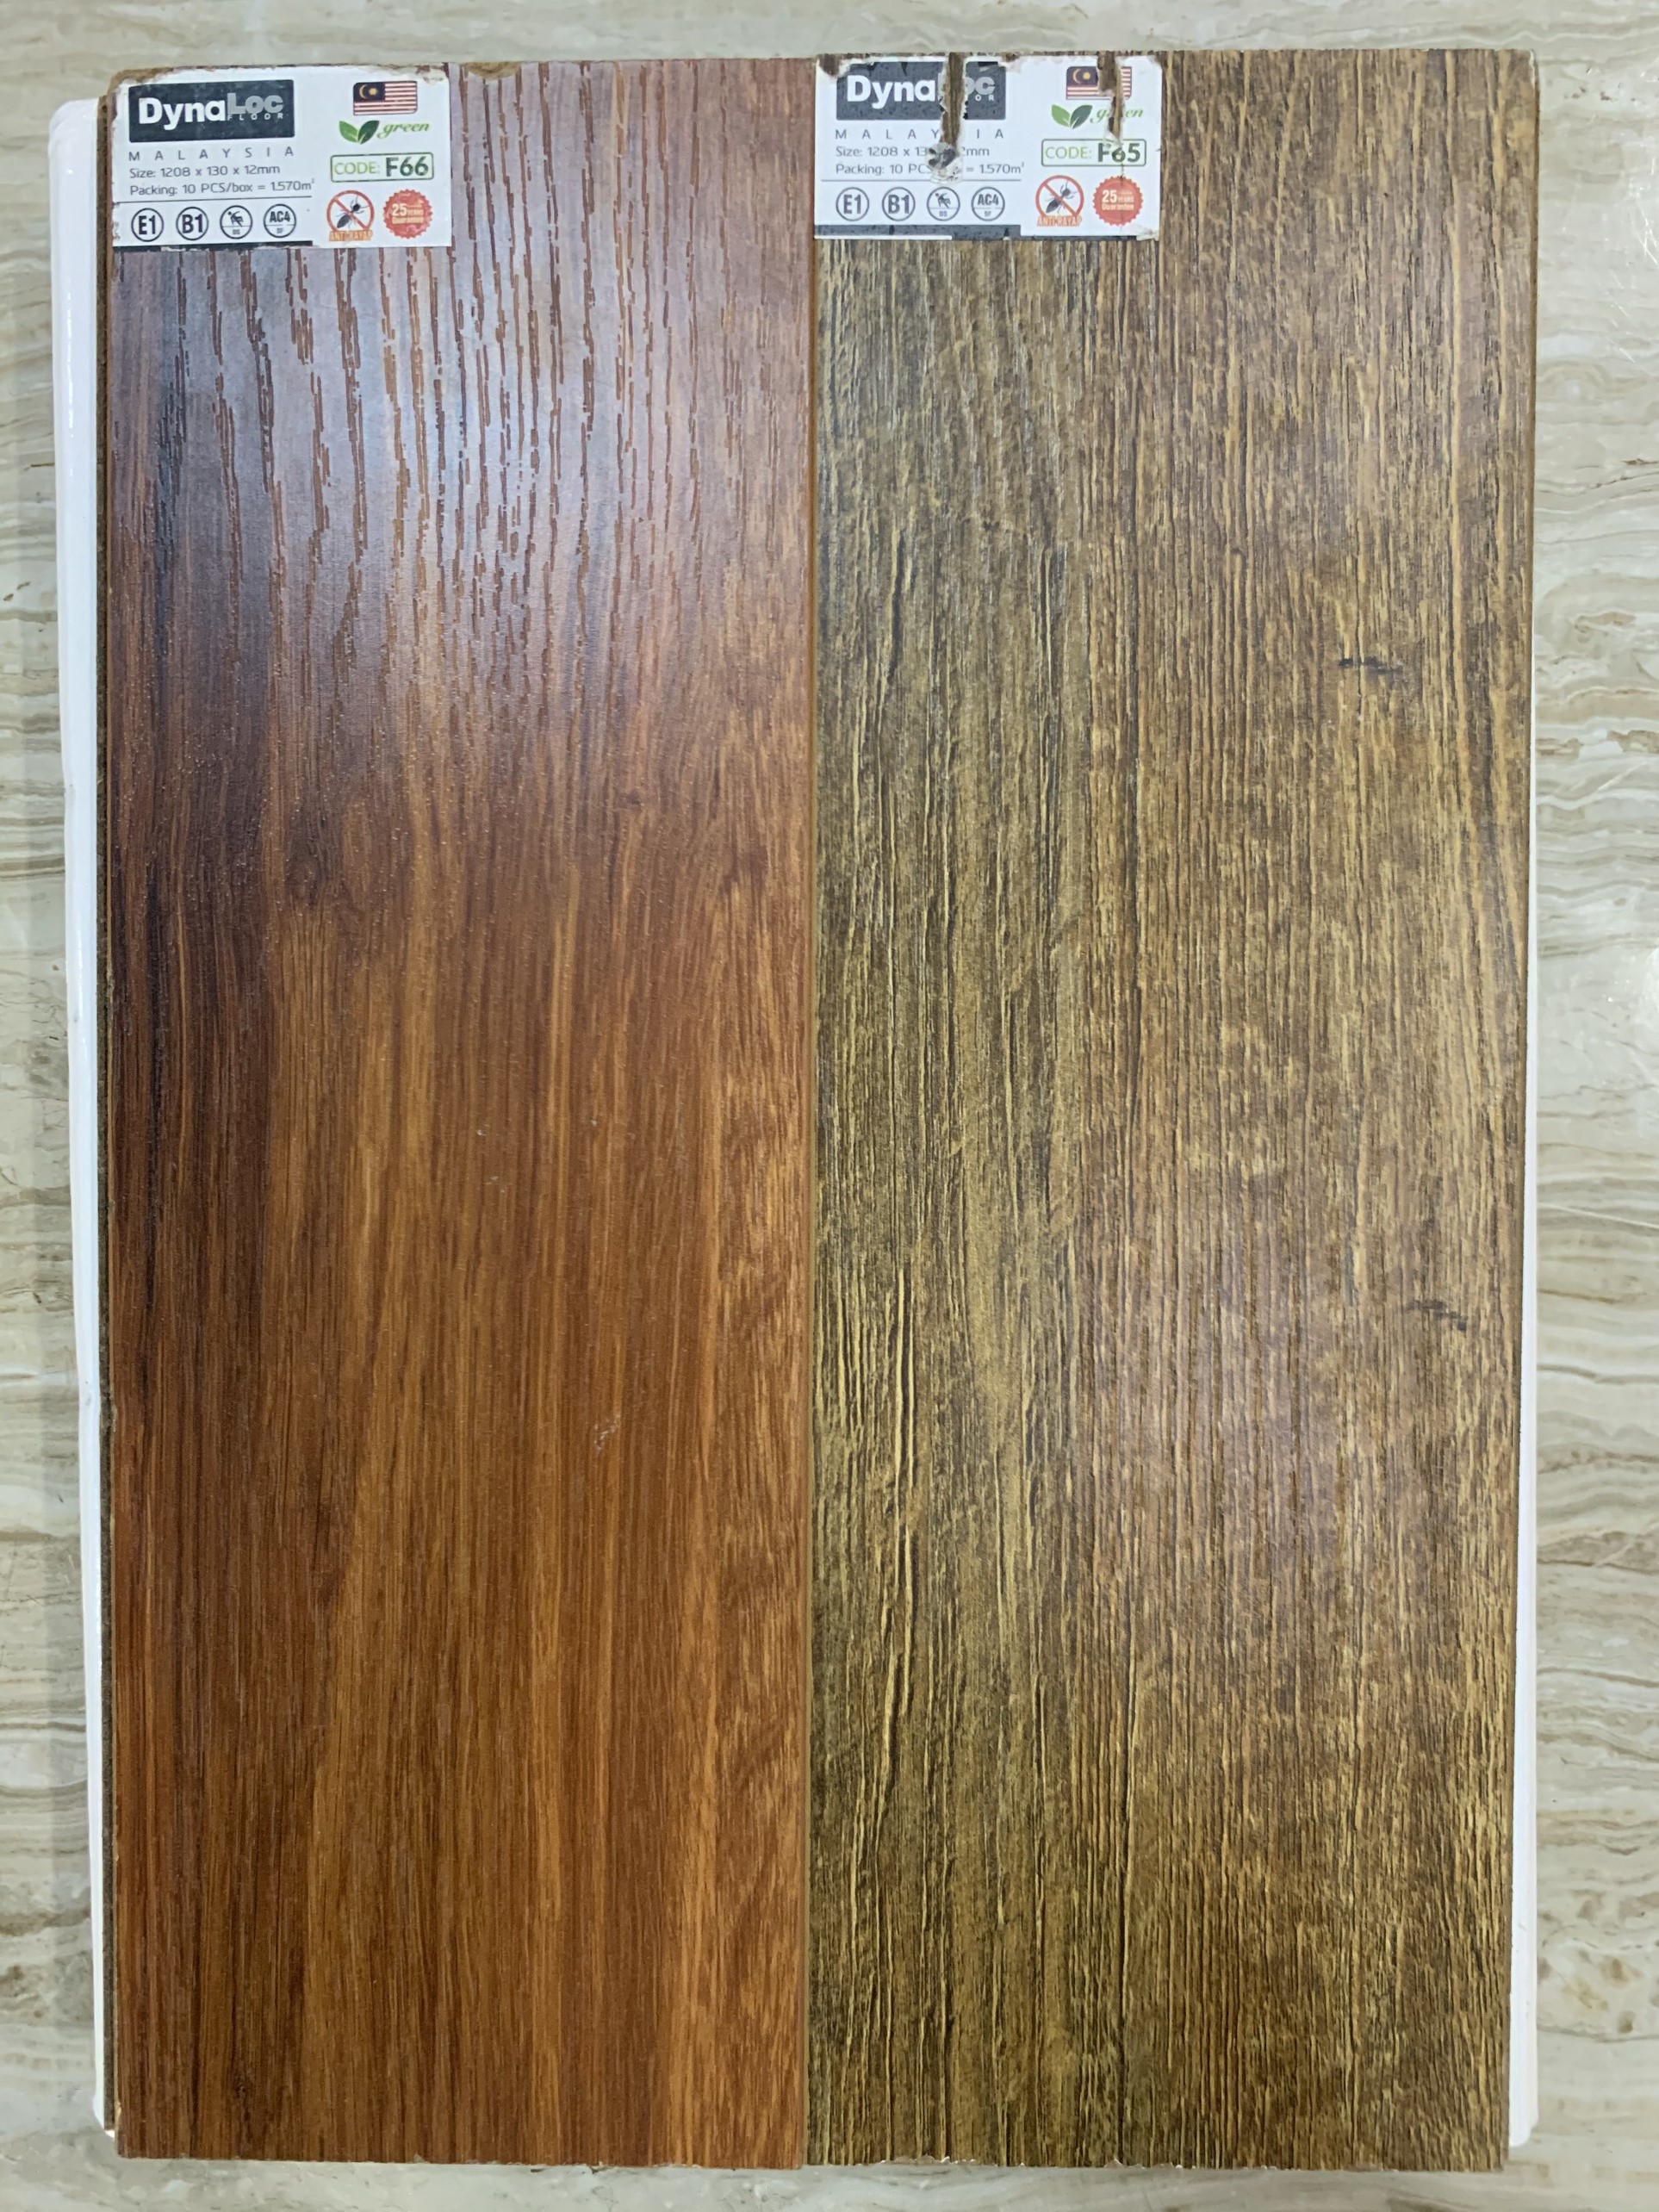 Sàn gỗ DYNALOC 12mm F66-F65